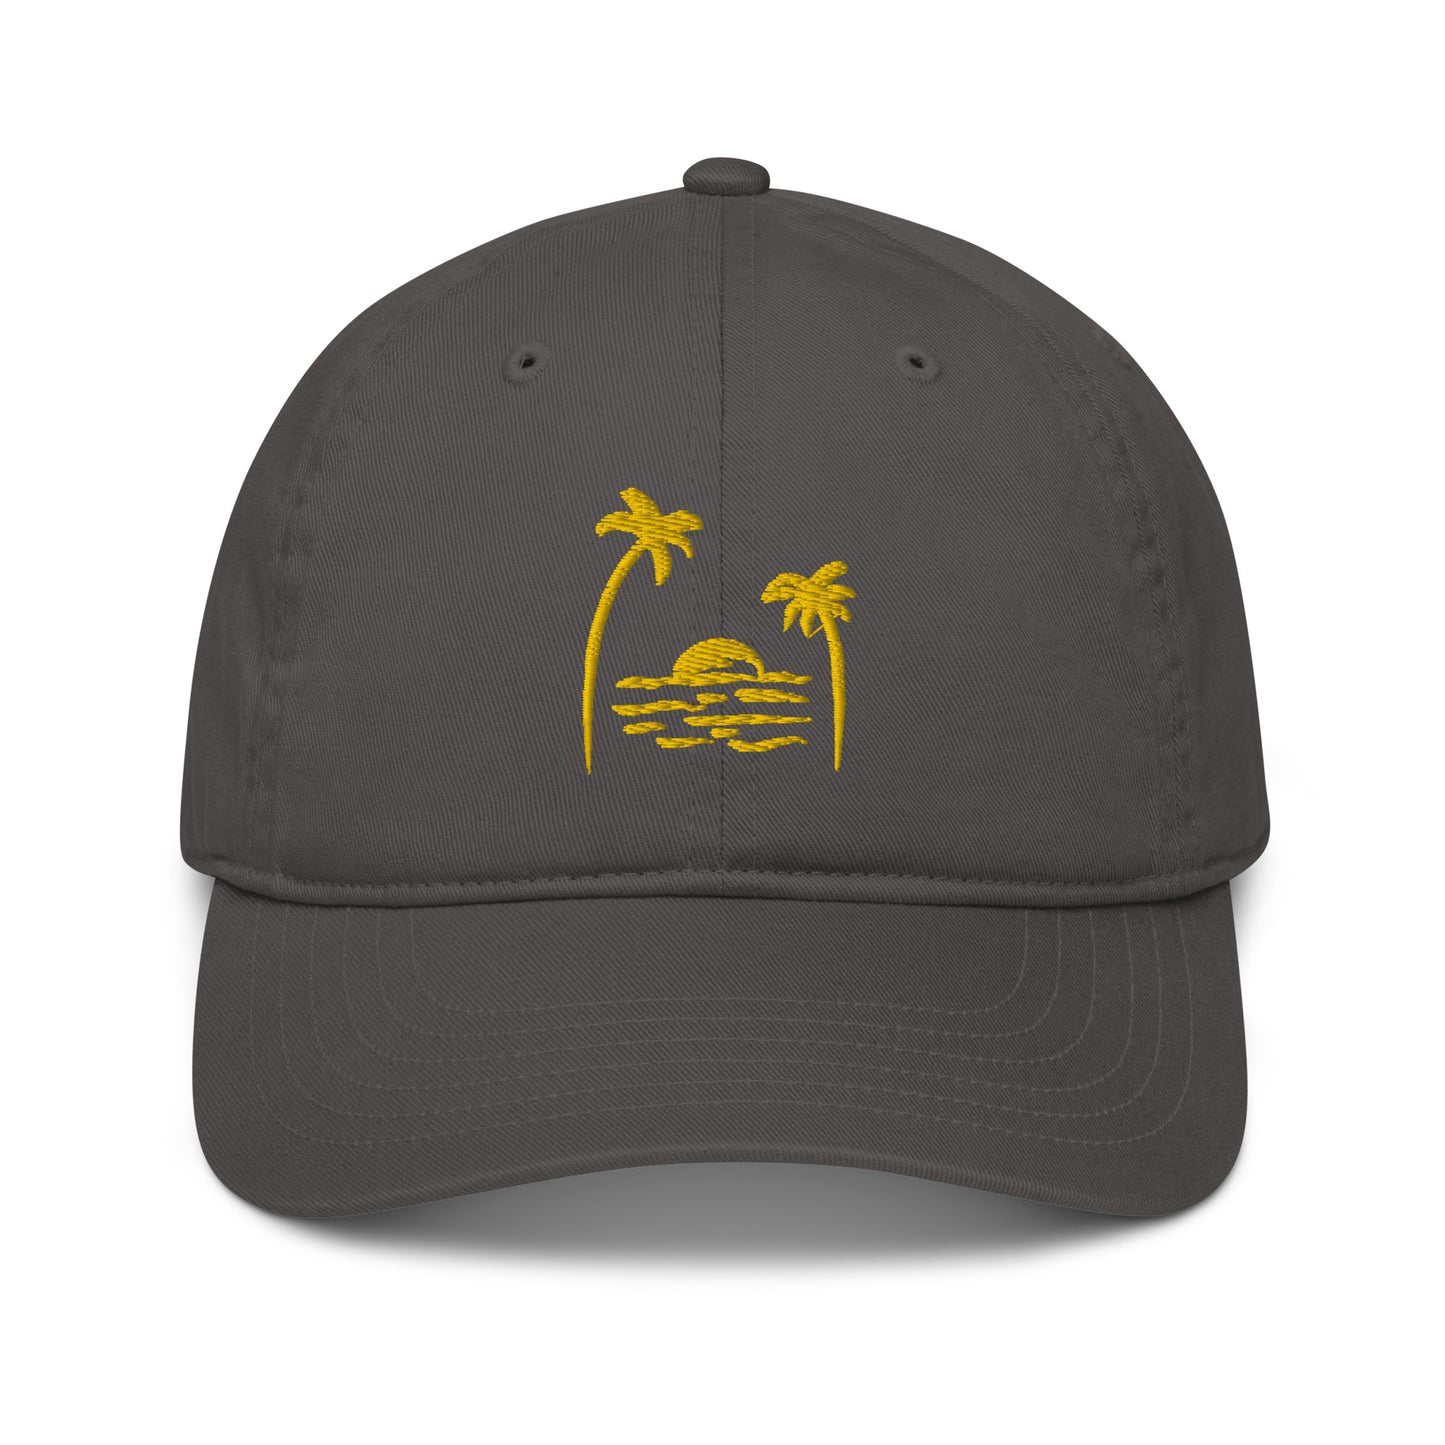 Organic Palm Tree hat